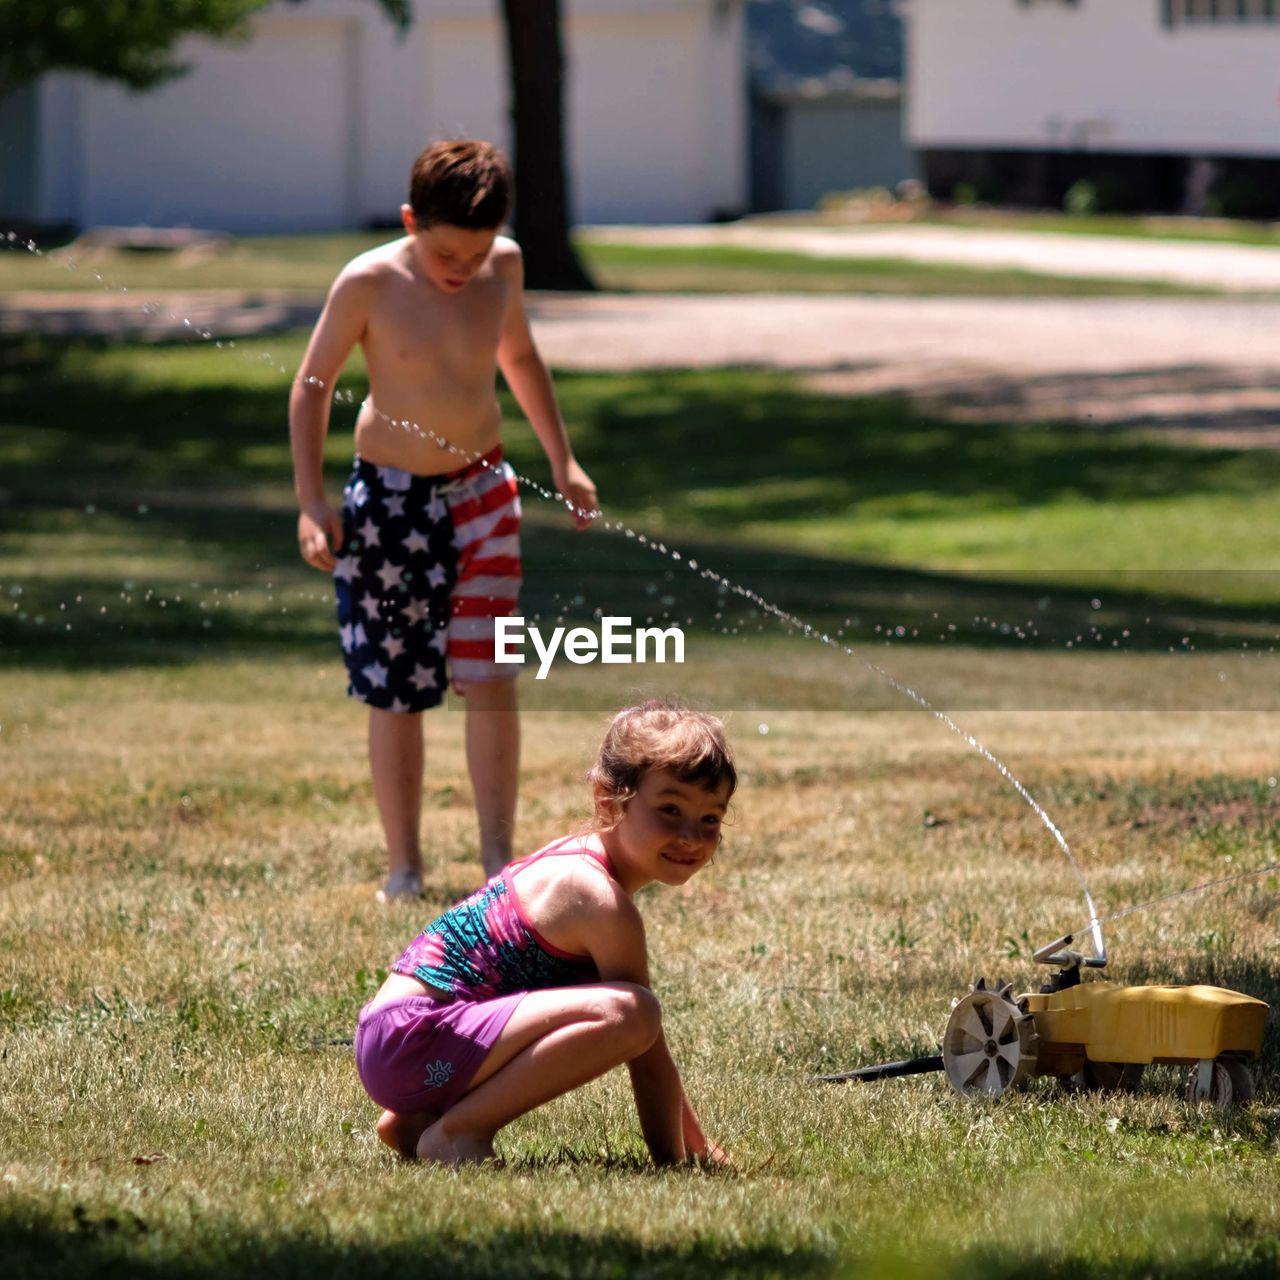 Water spraying on shirtless boy with sister in yard